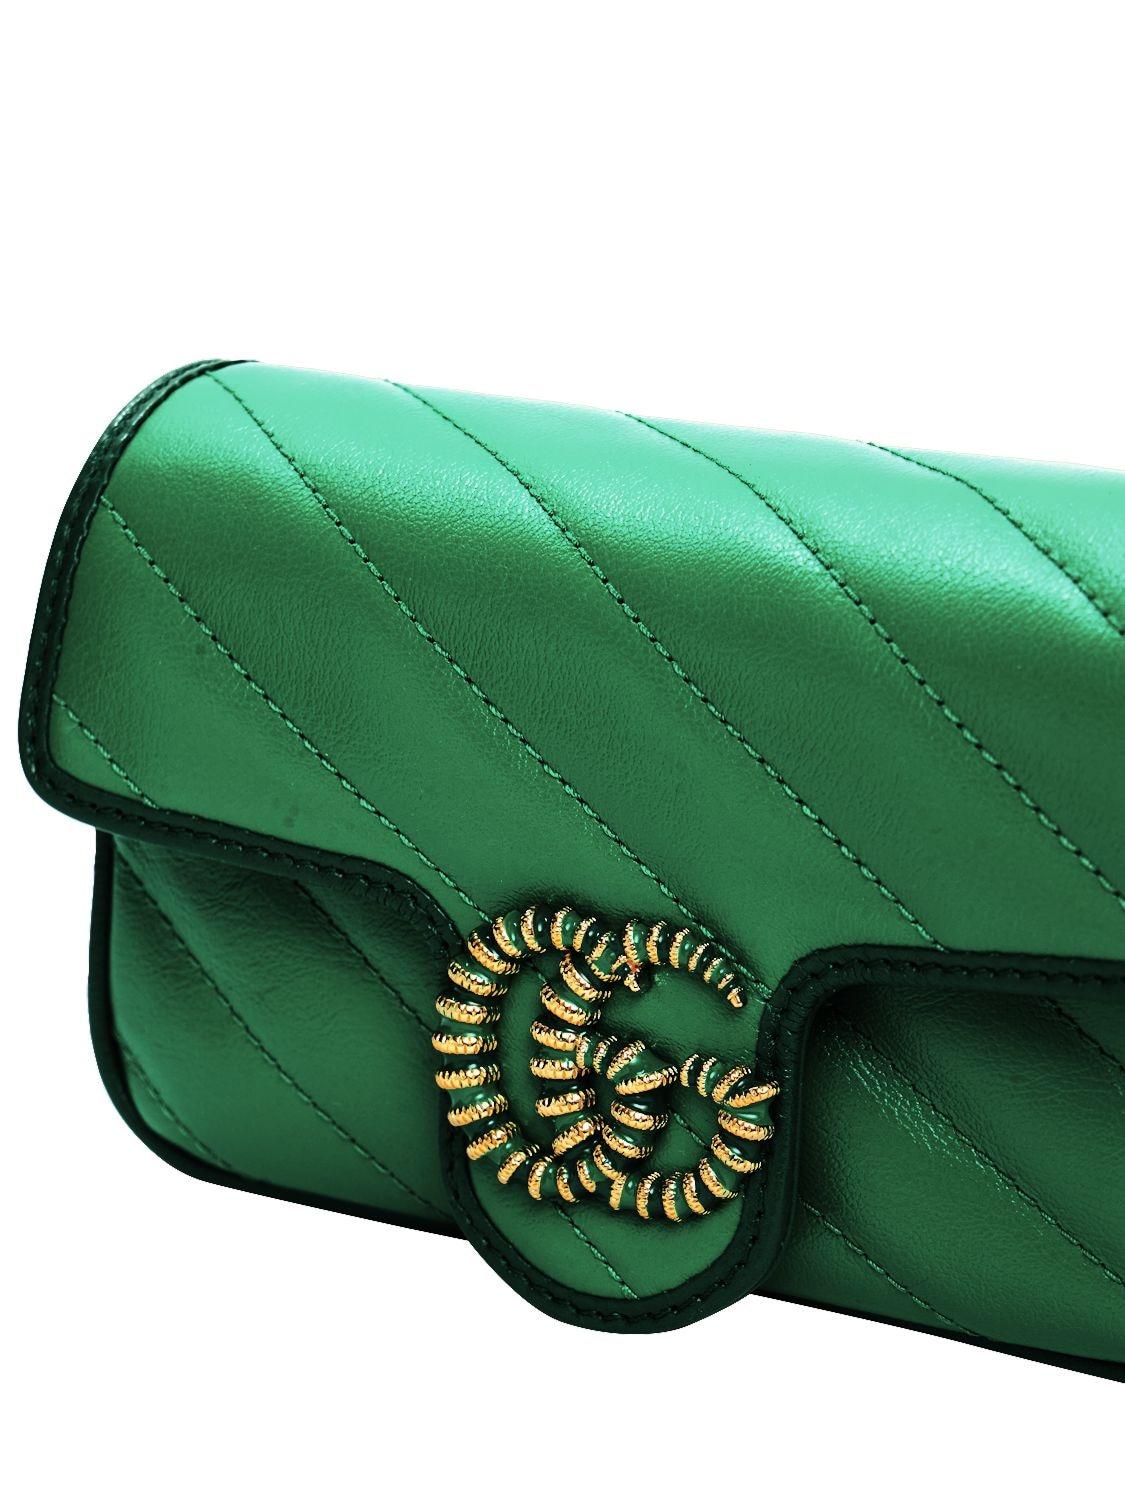 GG Marmont green Super Mini shoulder bag #Sponsored #green